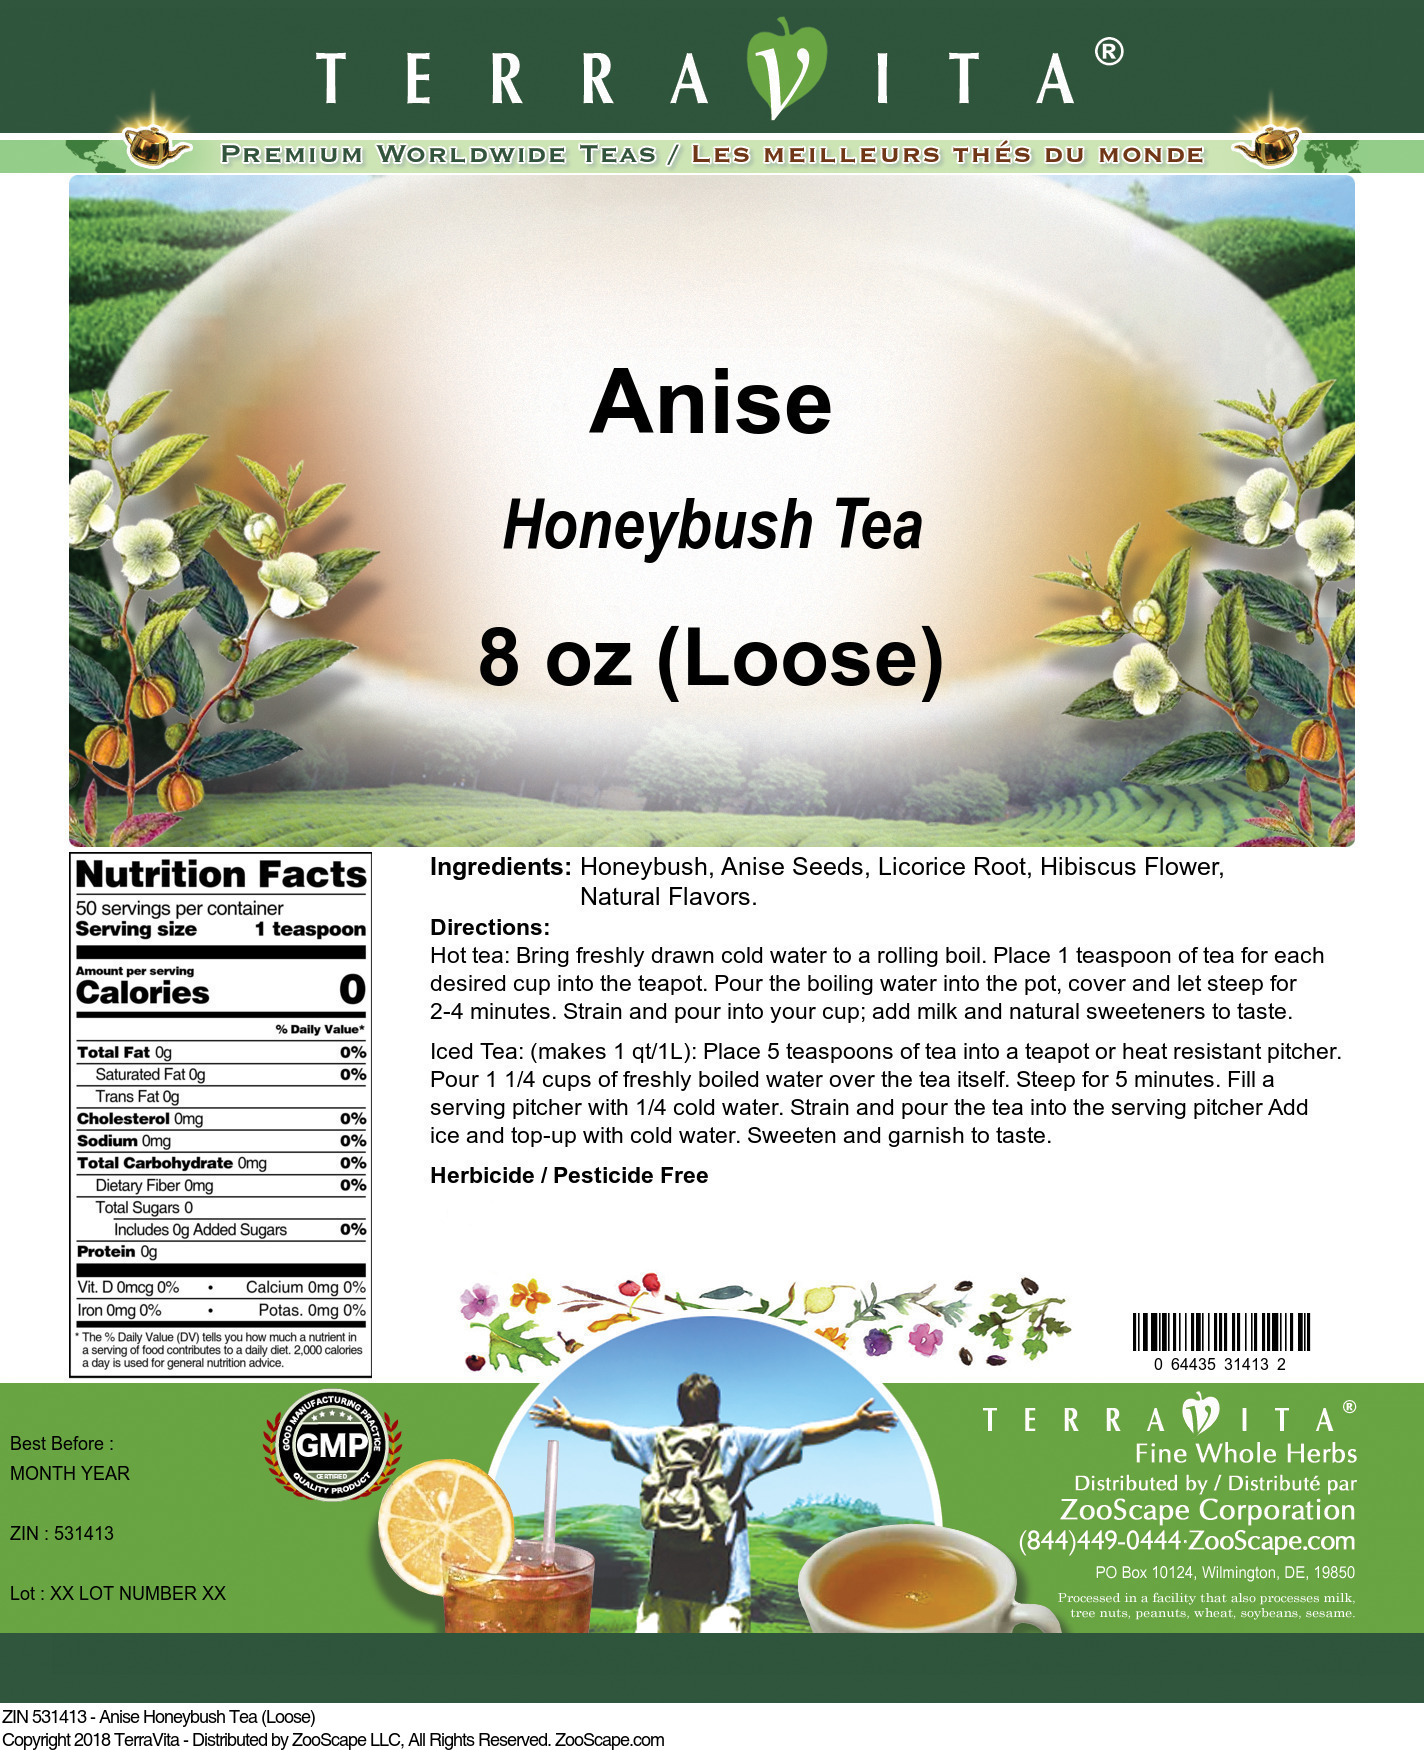 Anise Honeybush Tea (Loose) - Label